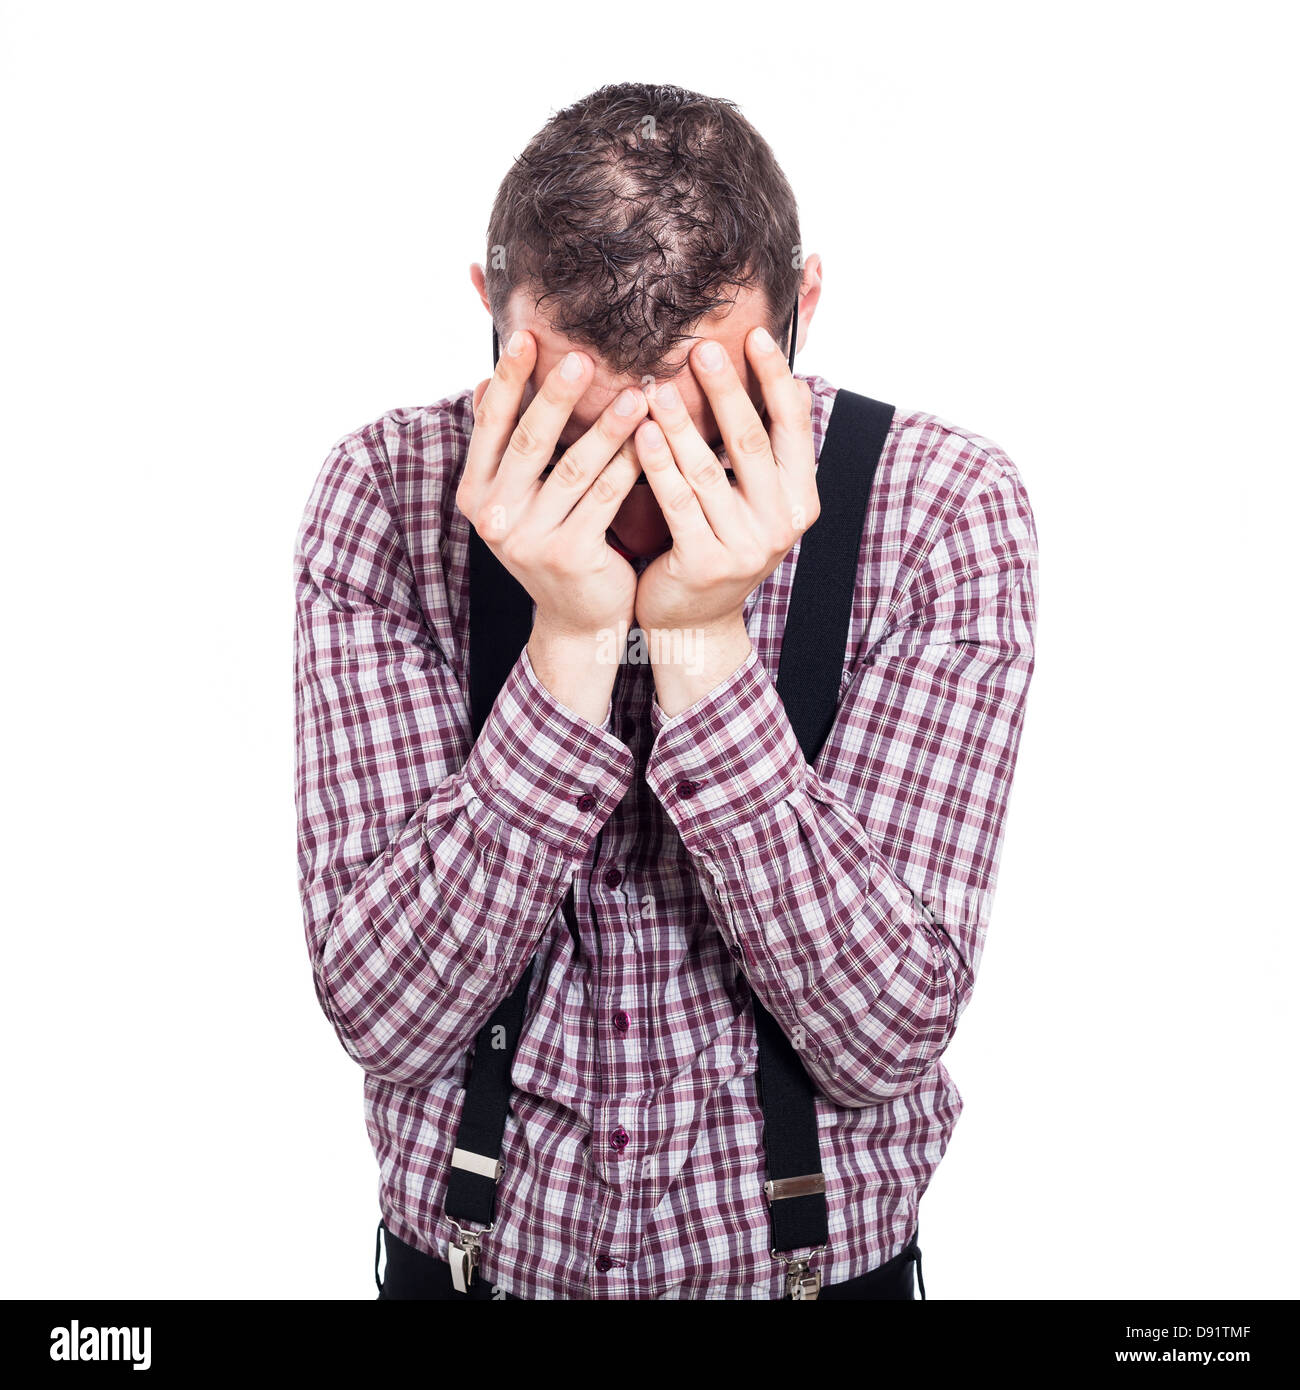 Unhappy depressed man, isolated on white background Stock Photo